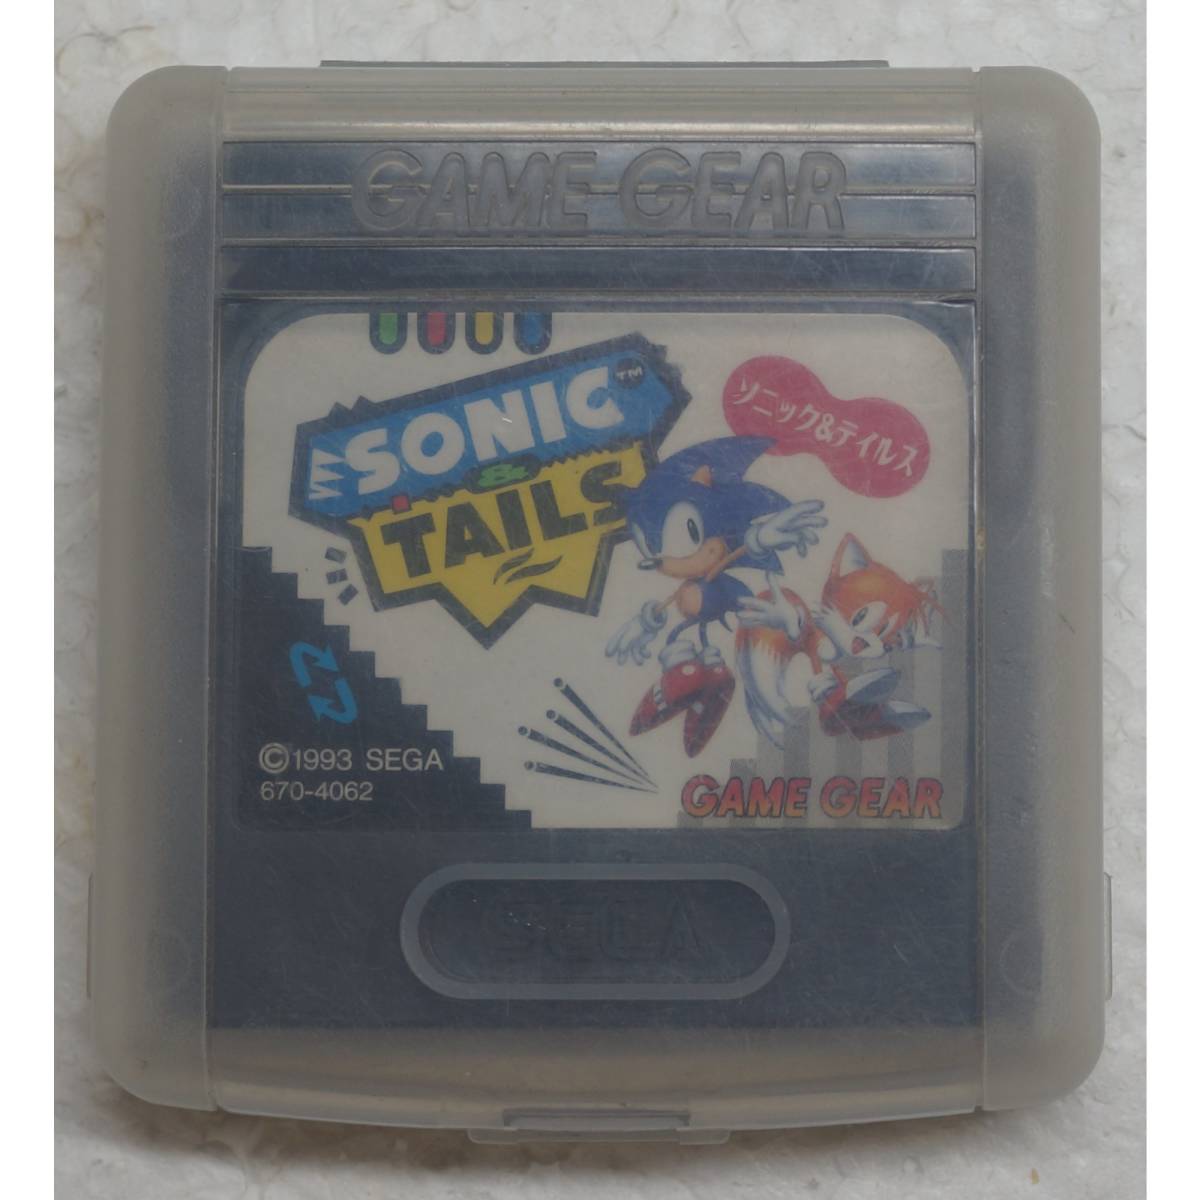  Sega Game Gear SEGA GAME GEAR Sonic & tail sSONIC&TAILS 670-4062